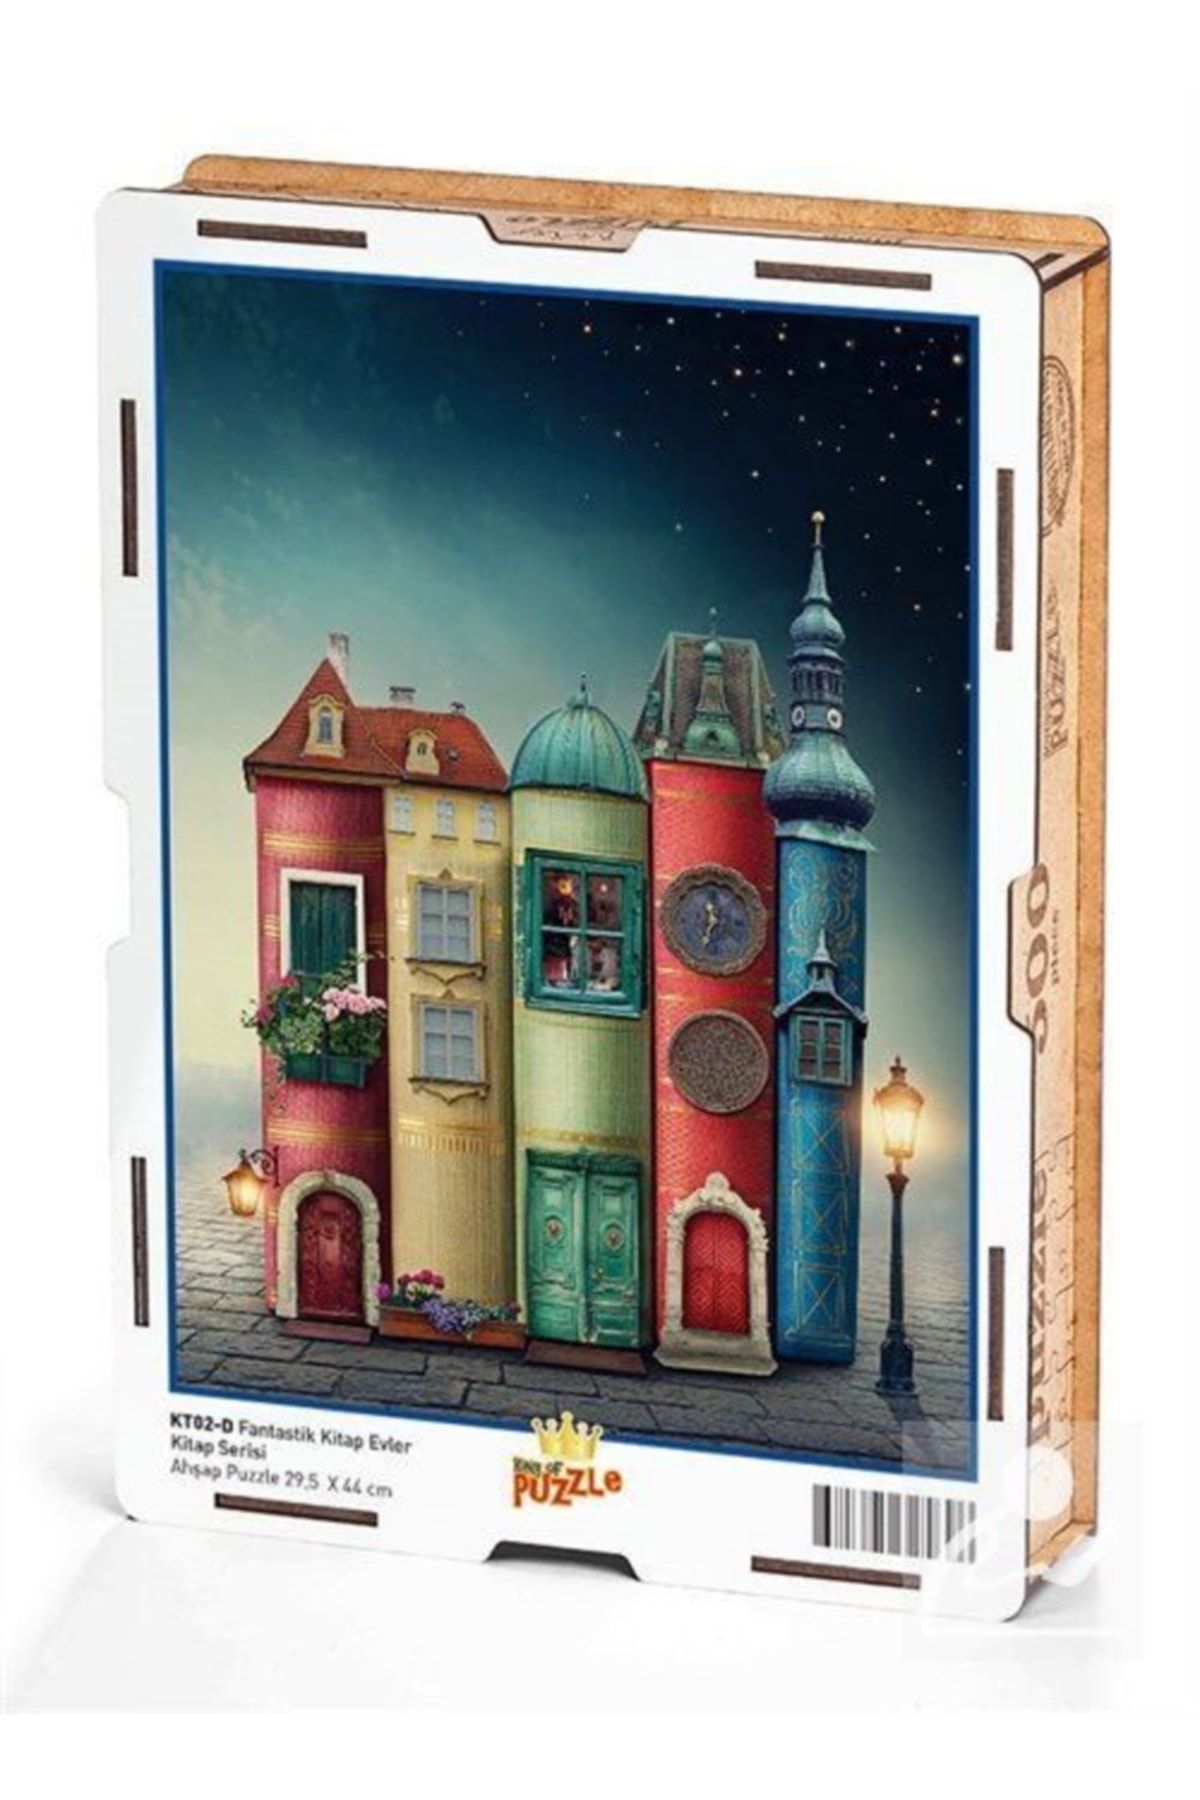 King Of Puzzle Fantastik Kitap Evler Ahşap Puzzle 500 Parça (kt02-d)